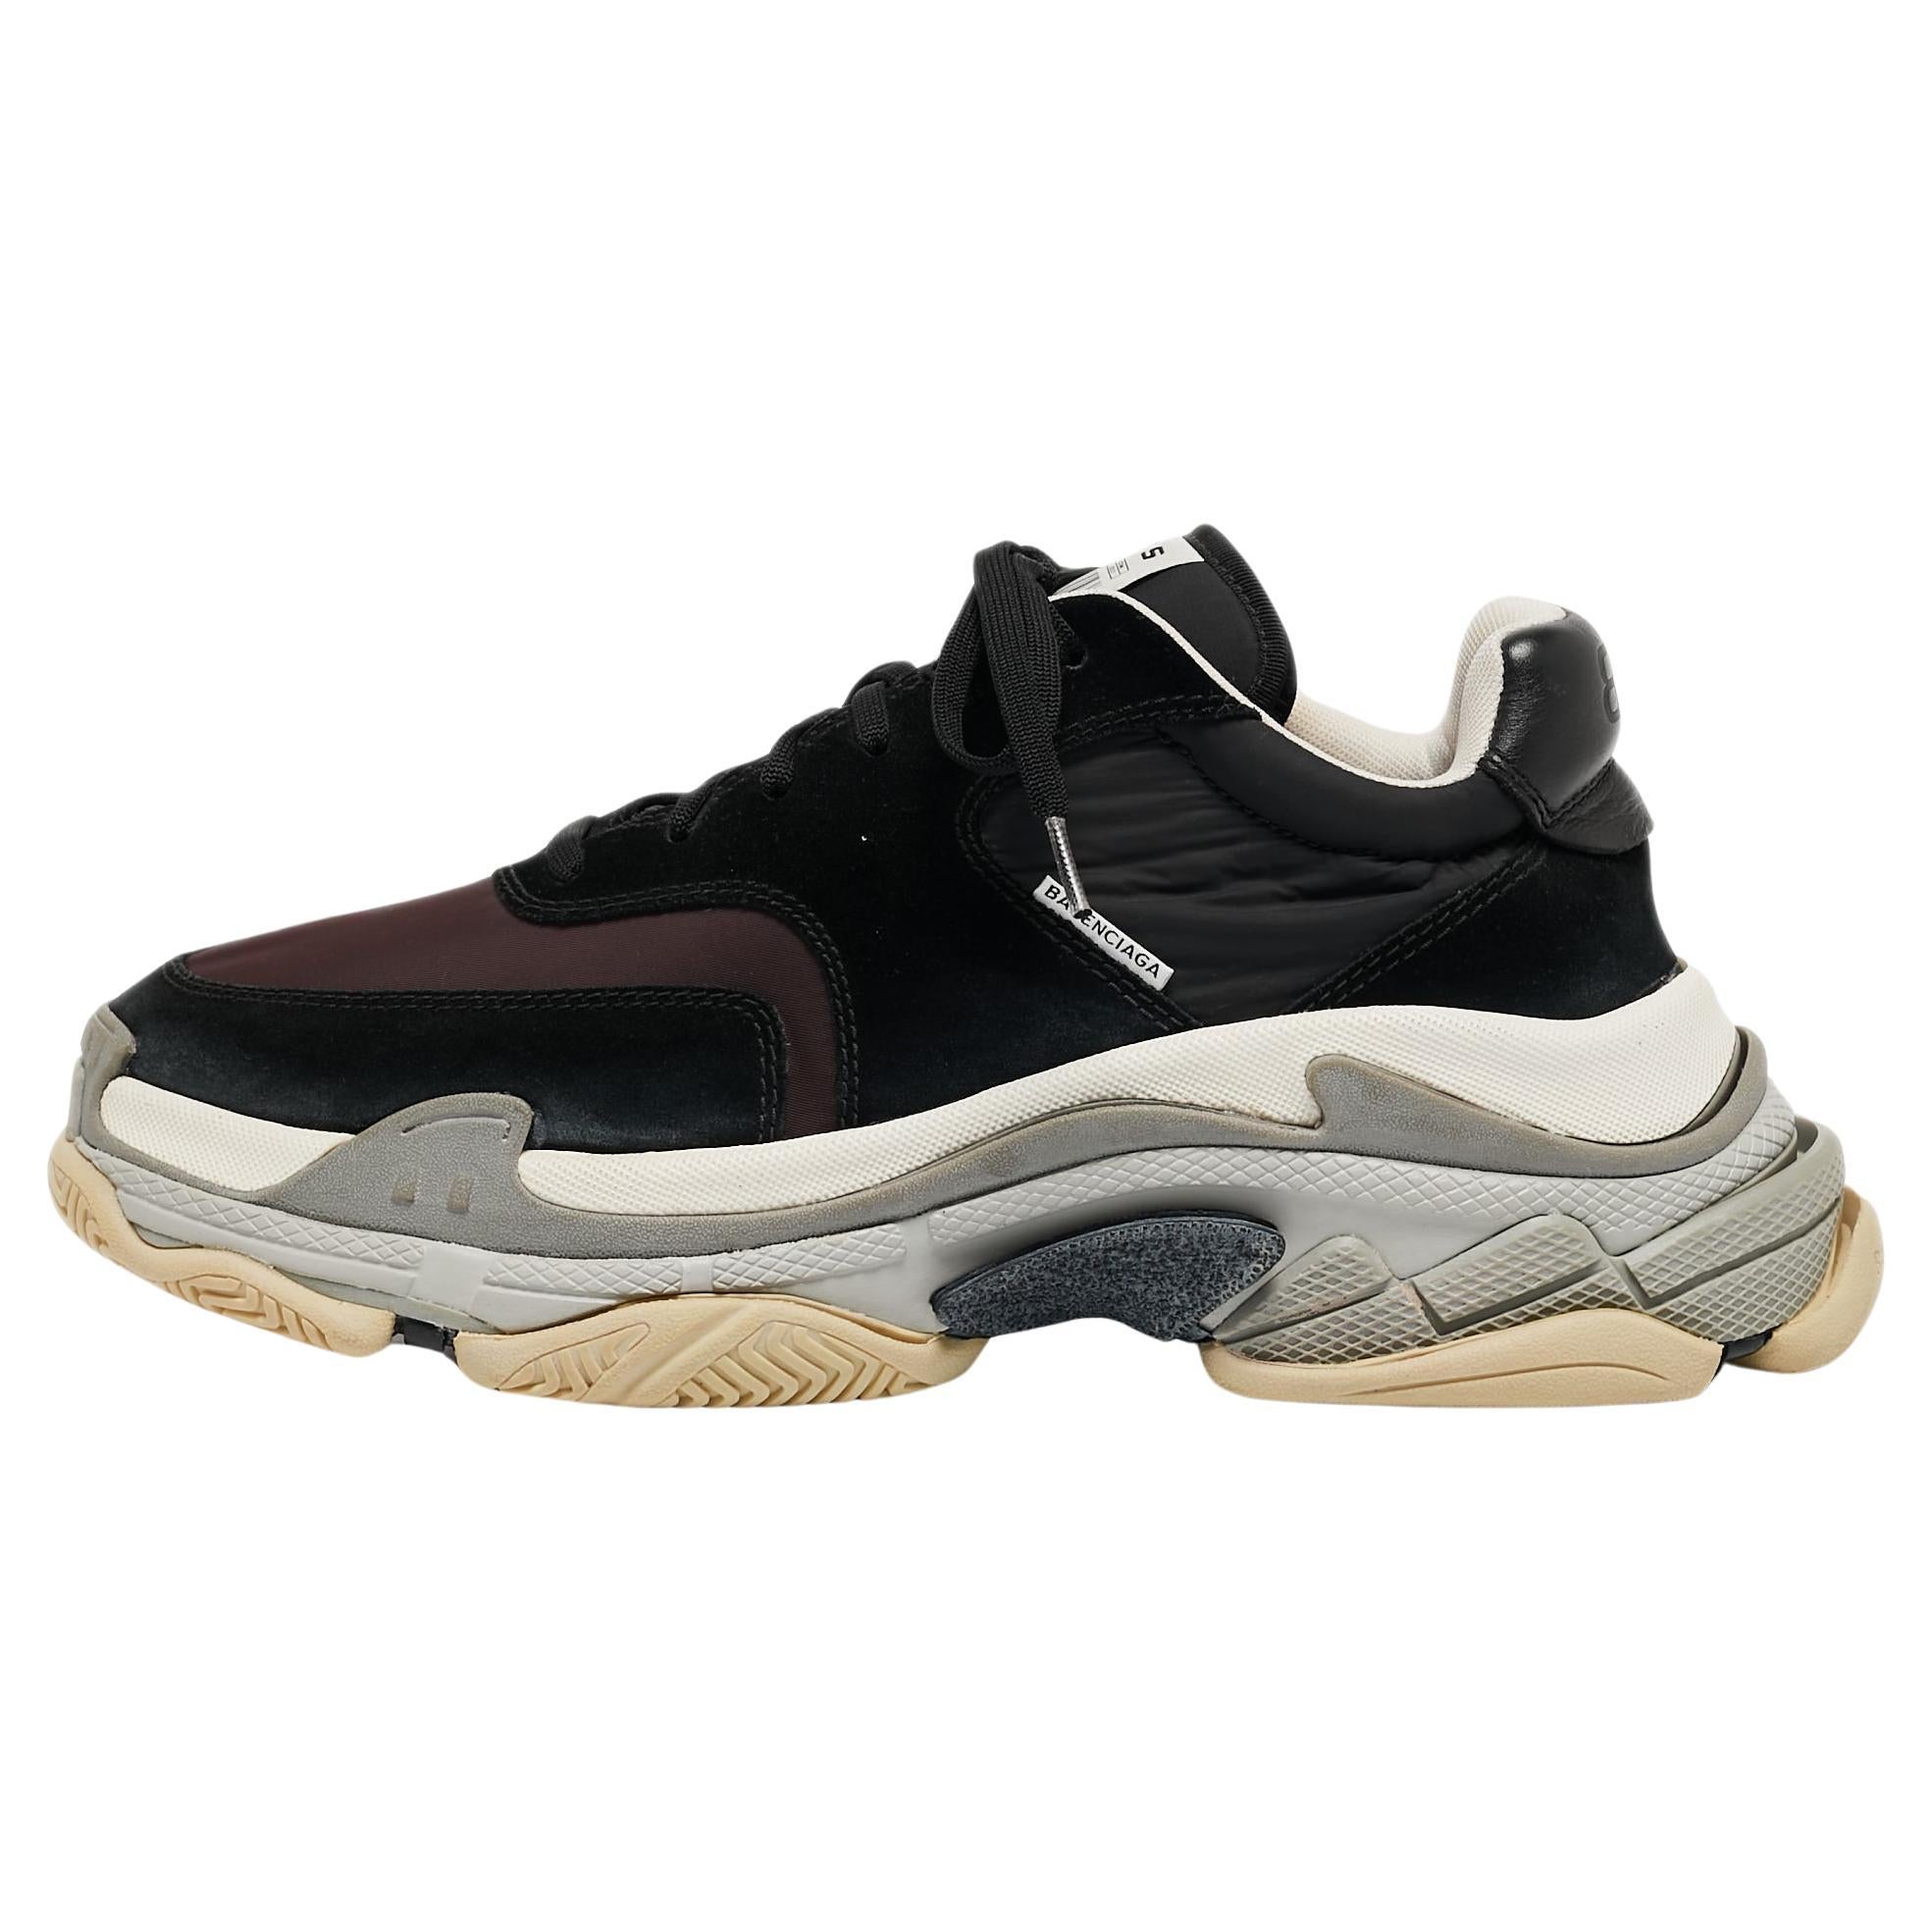 Balenciaga Black/Burgundy Suede and Nylon Triple S Sneakers Size 43